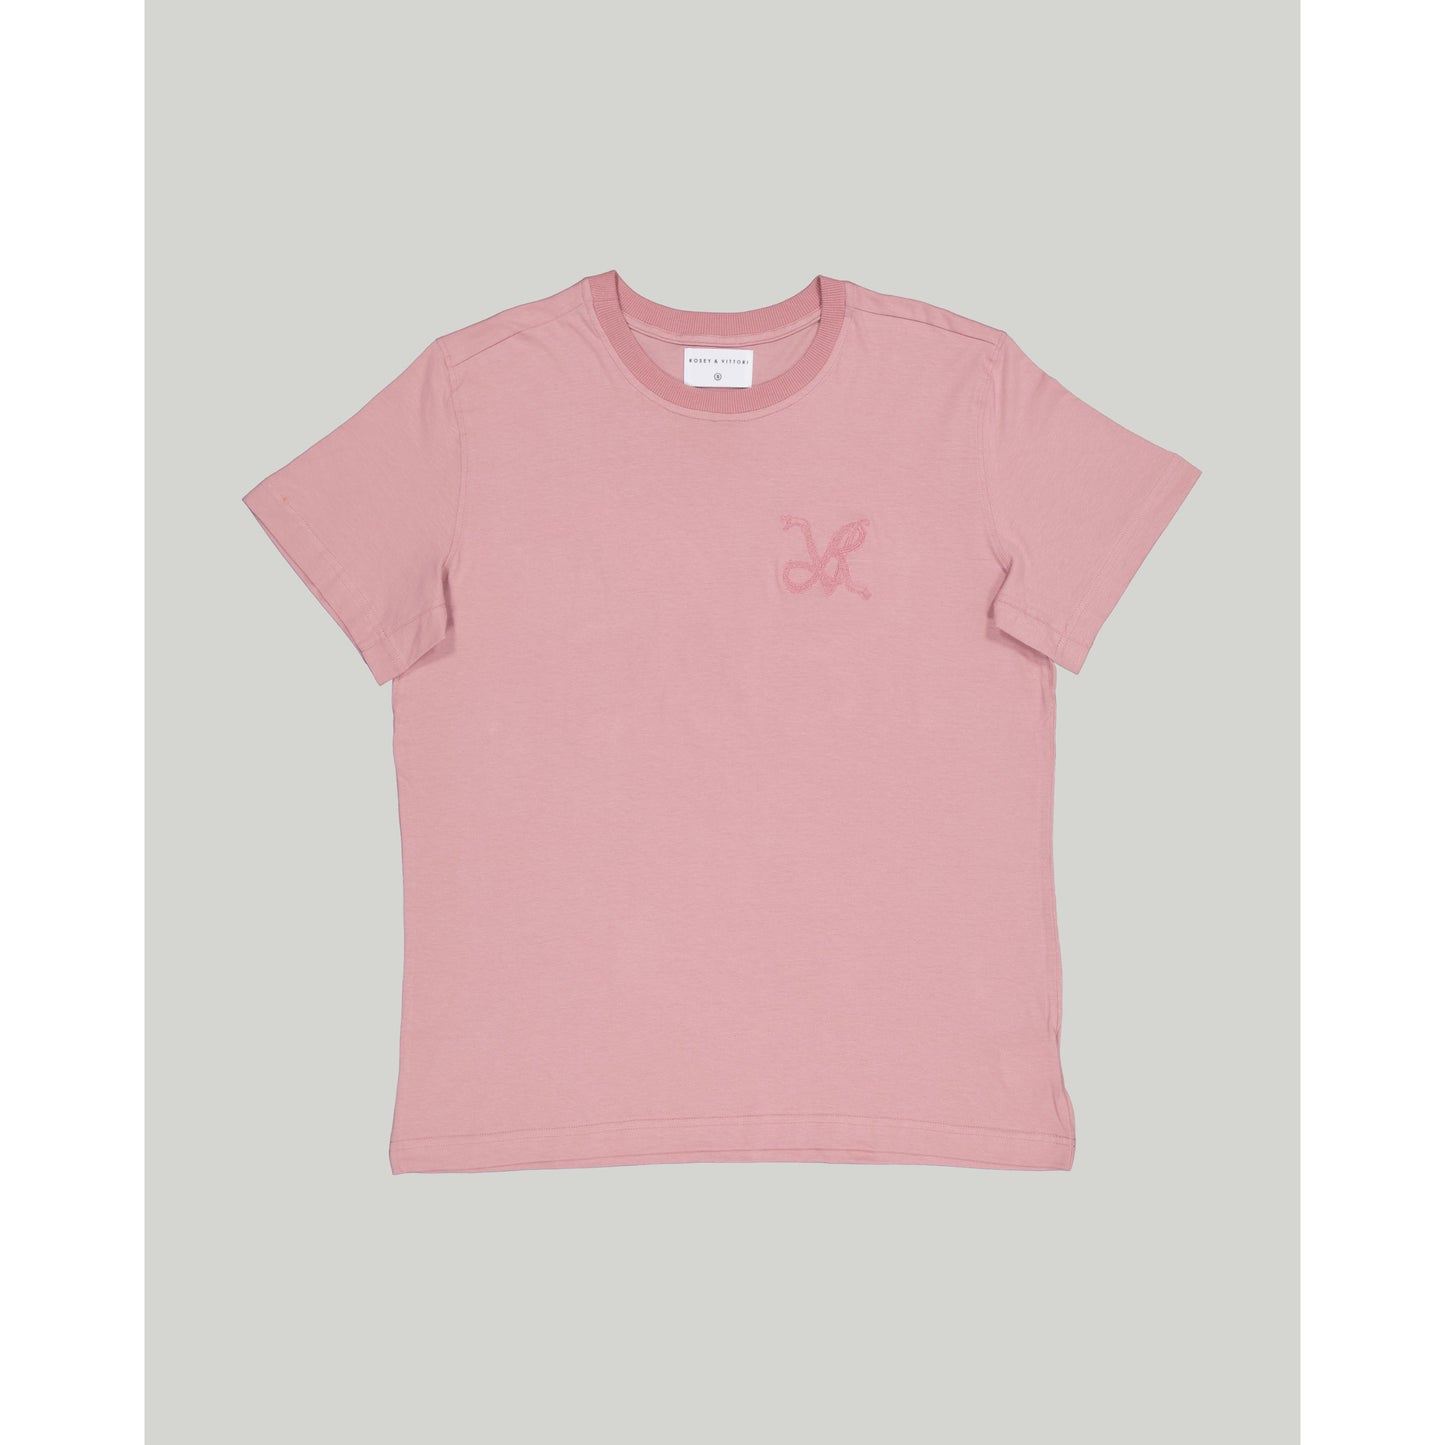 RV Tee - Cloudy Pink